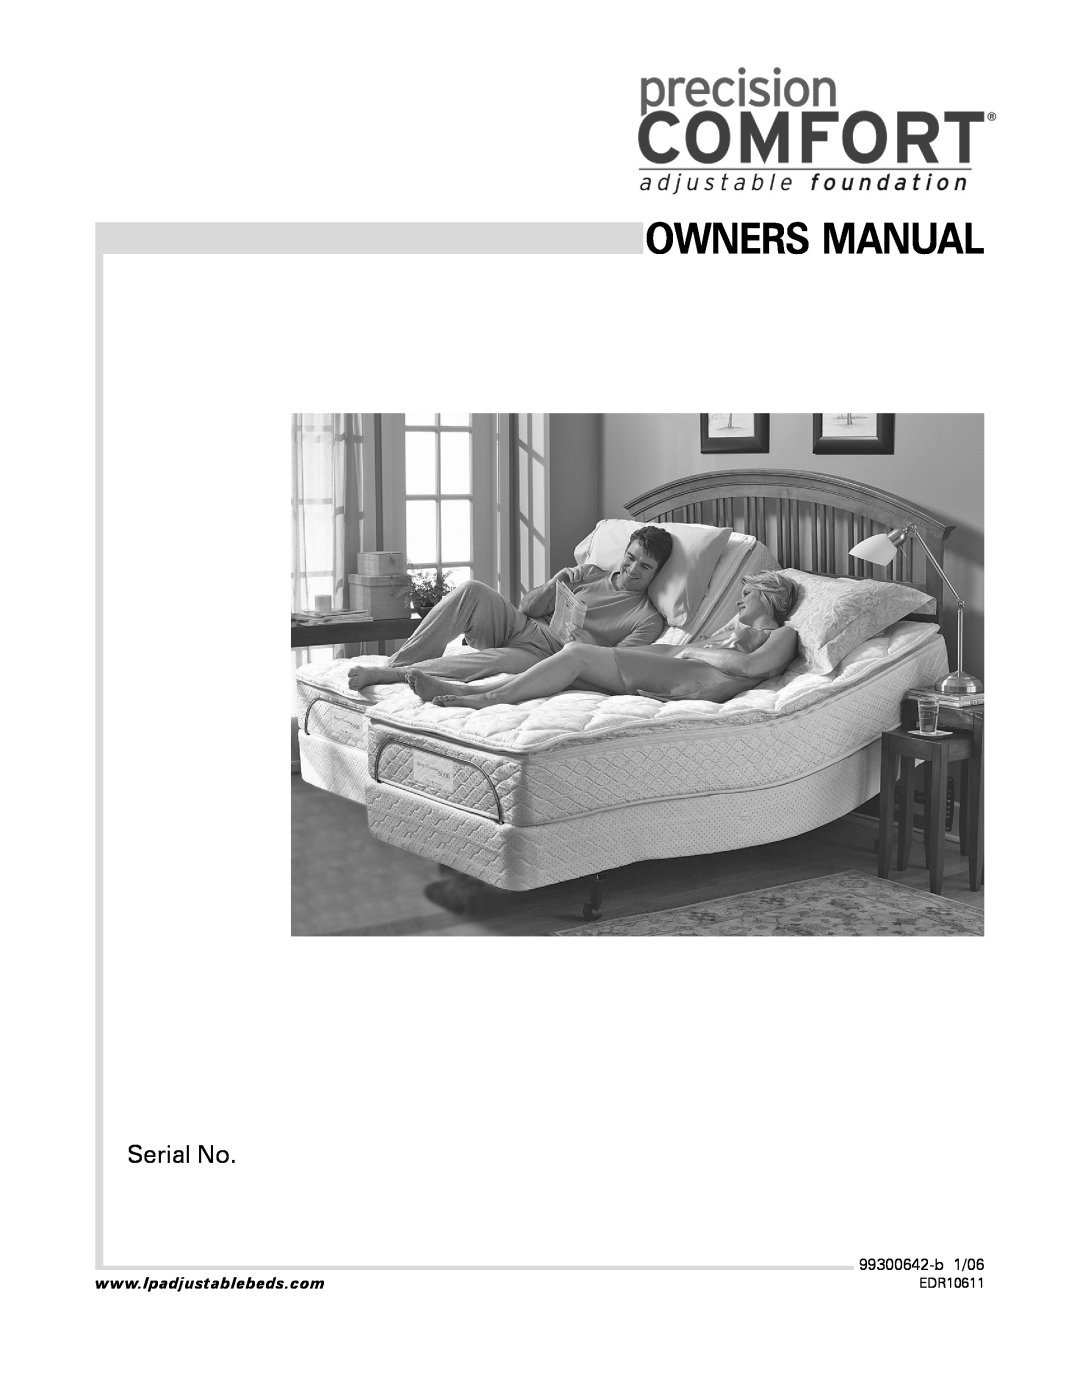 Select Comfort Precision Comfort Adjustable Foundation owner manual Serial No, EDR10611 